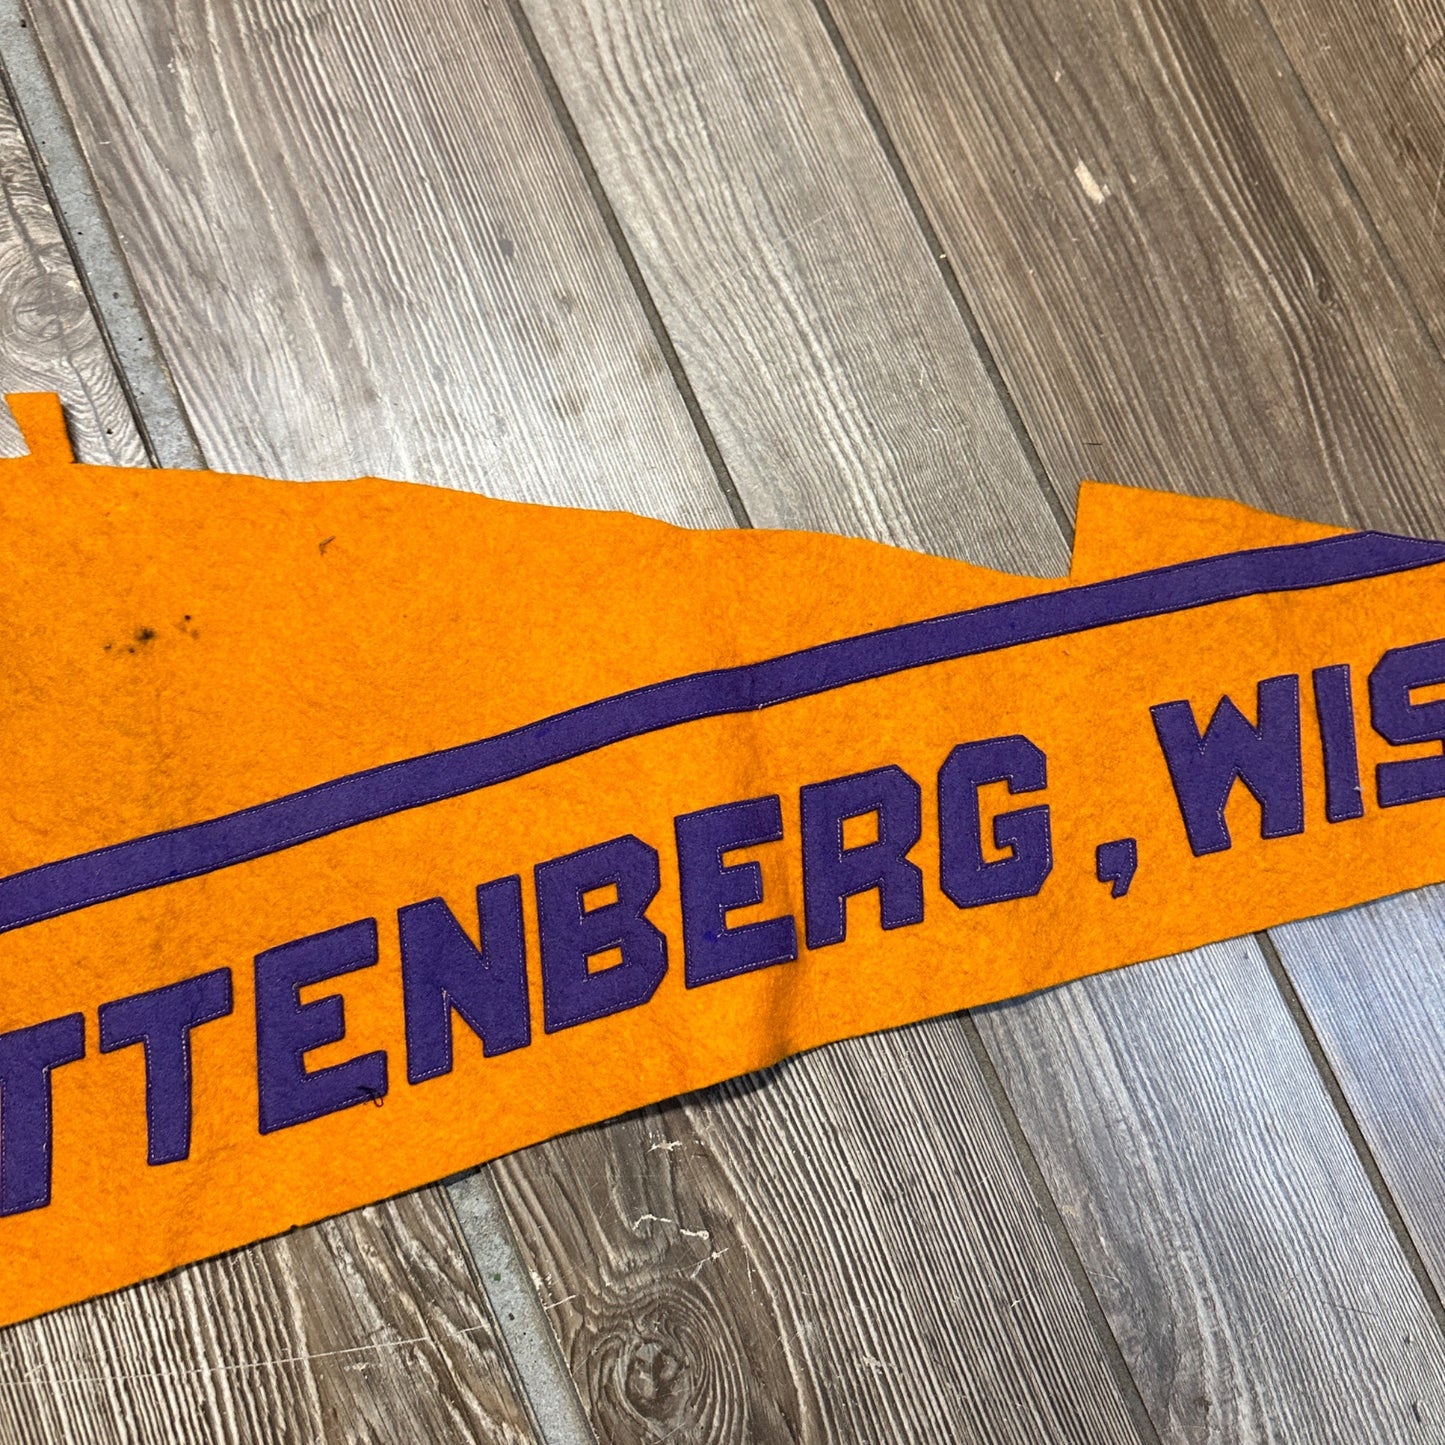 Vintage 1910s Wittenburg High School Wisconsin Early Sewn Felt Banner Pennant